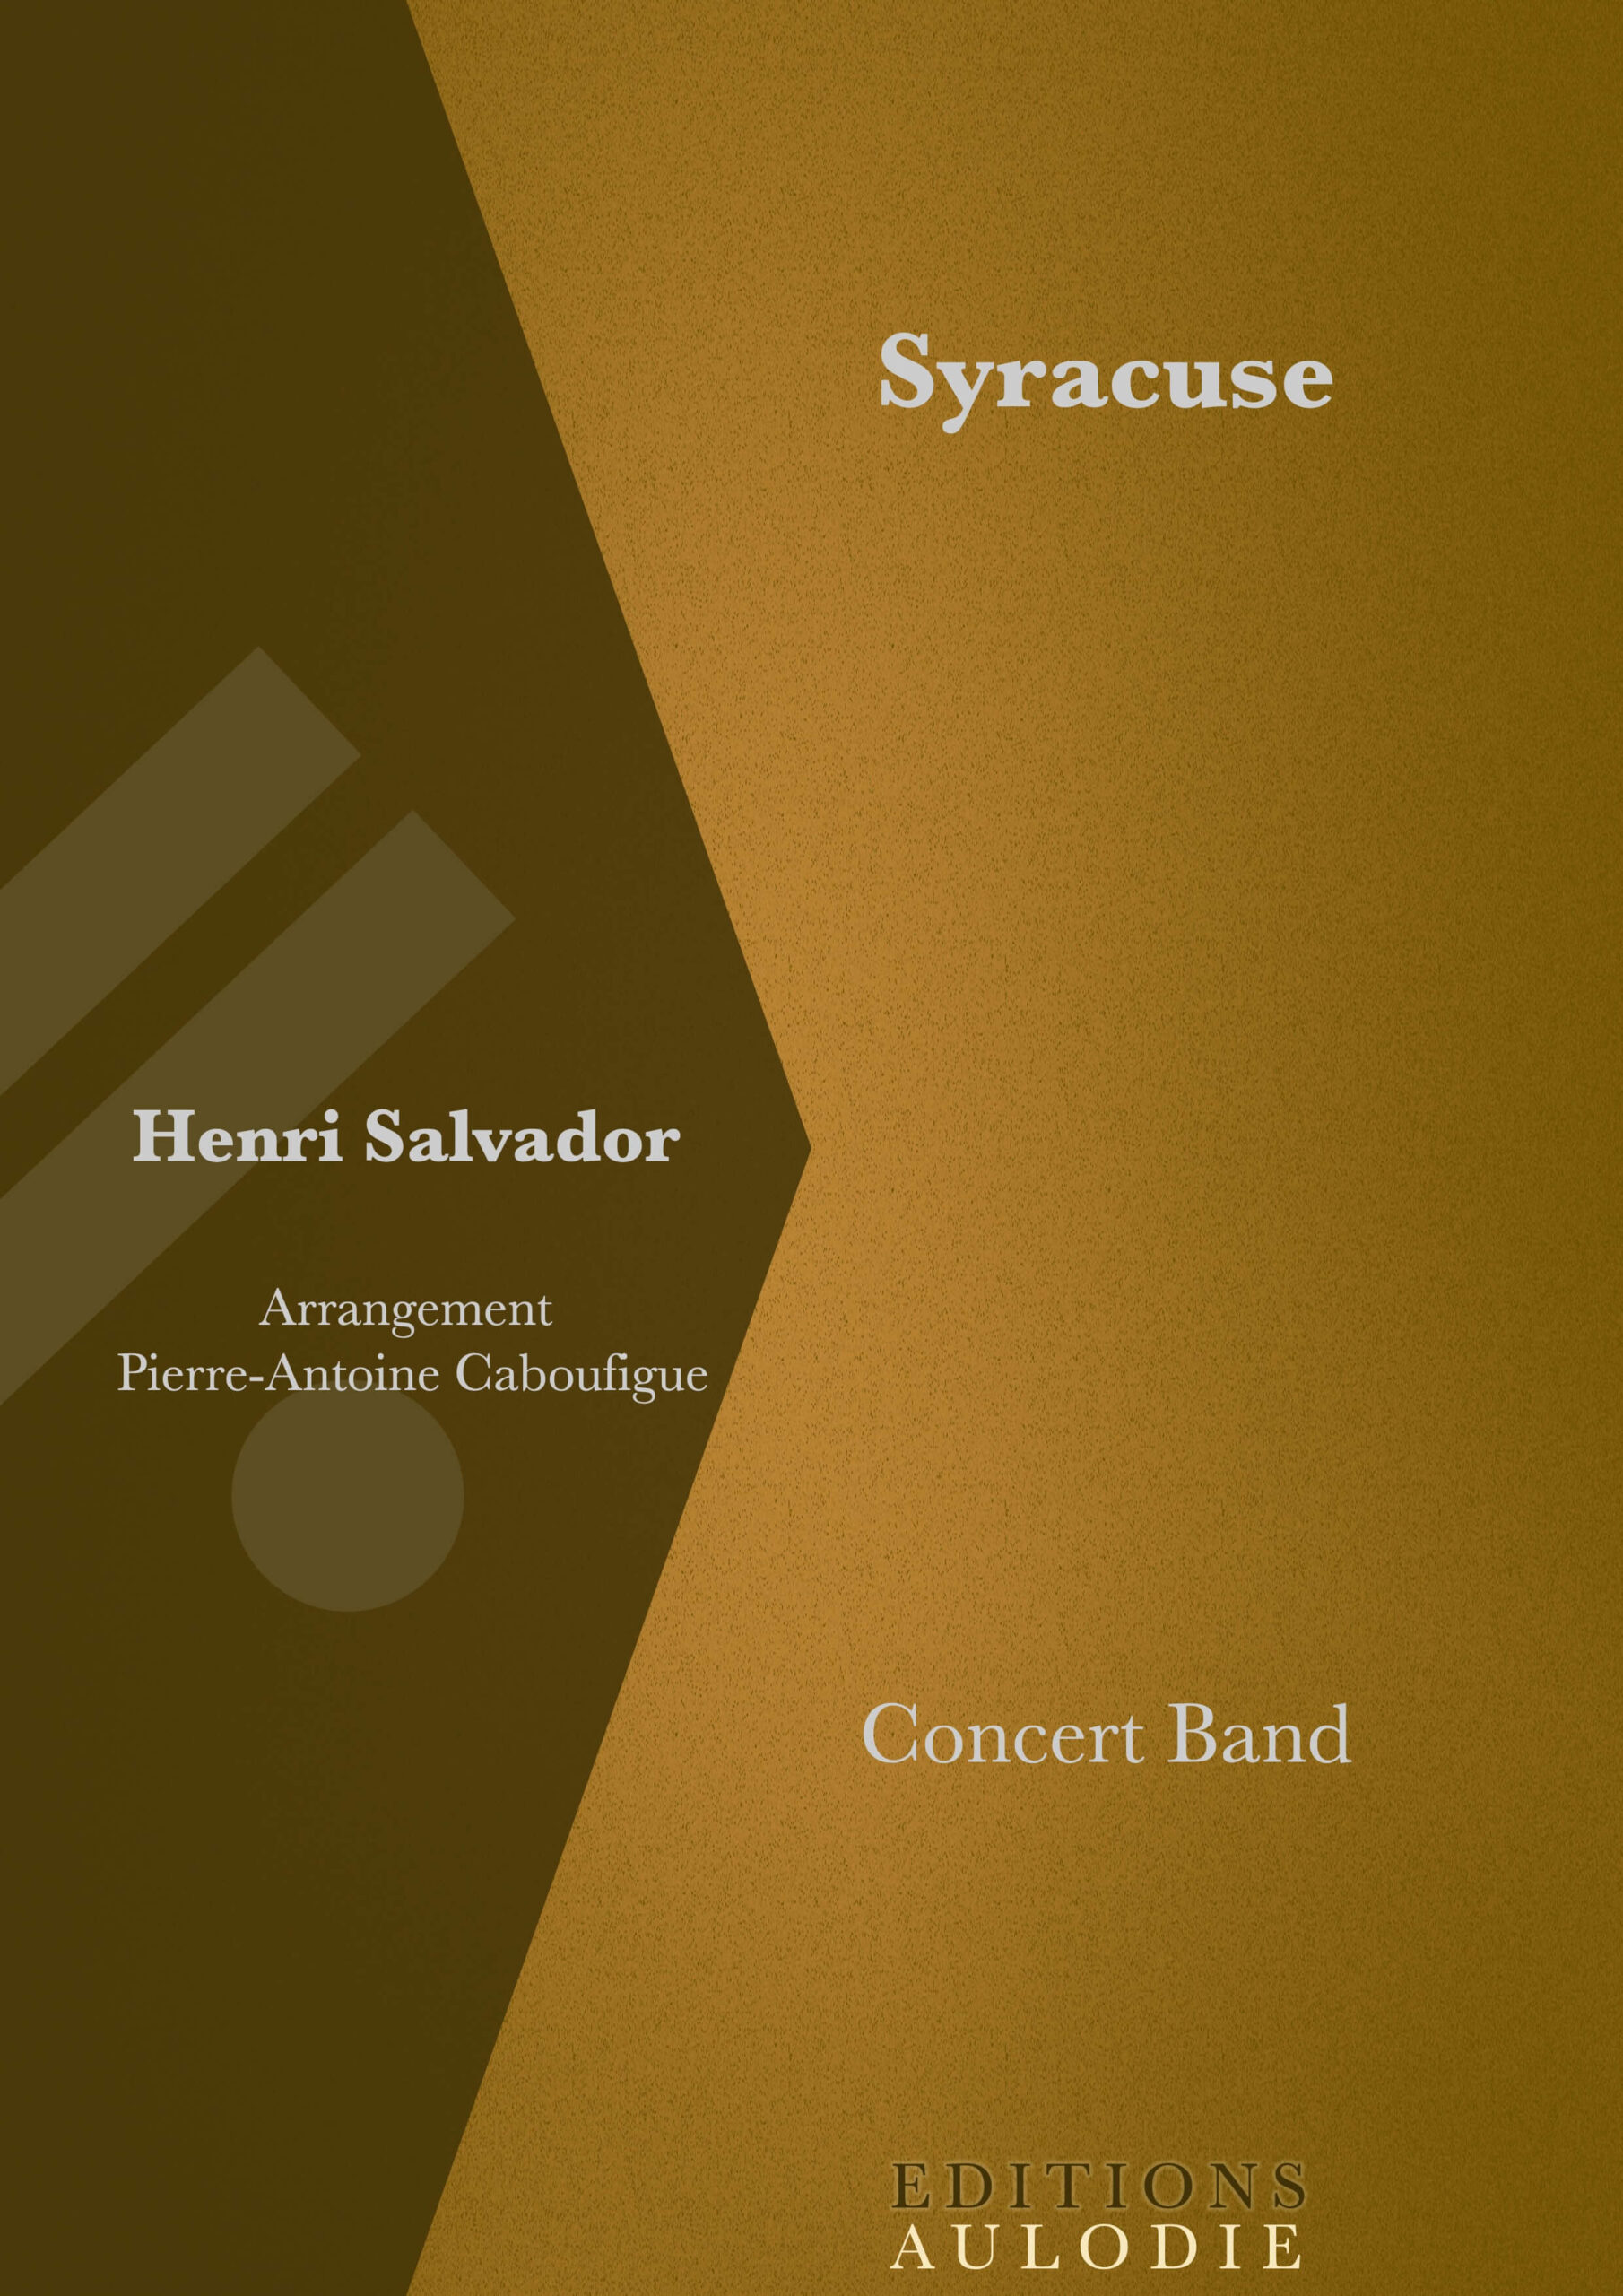 EA01036-Syracuse-Henri_Salvador-Concert_Band